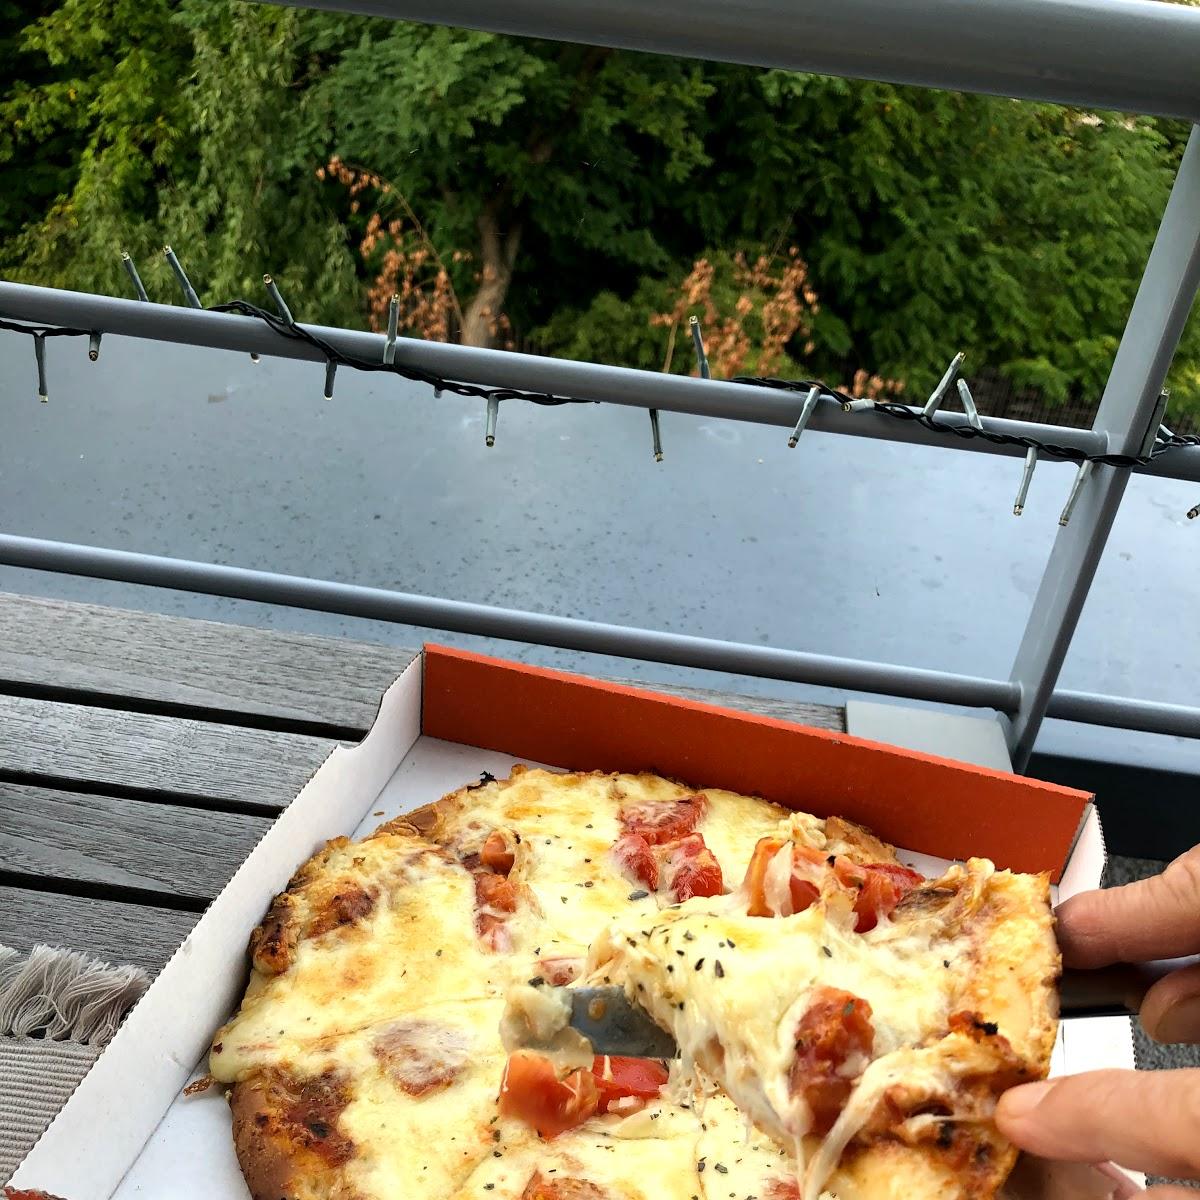 Restaurant "Pizzeria Sorrento" in Bonn